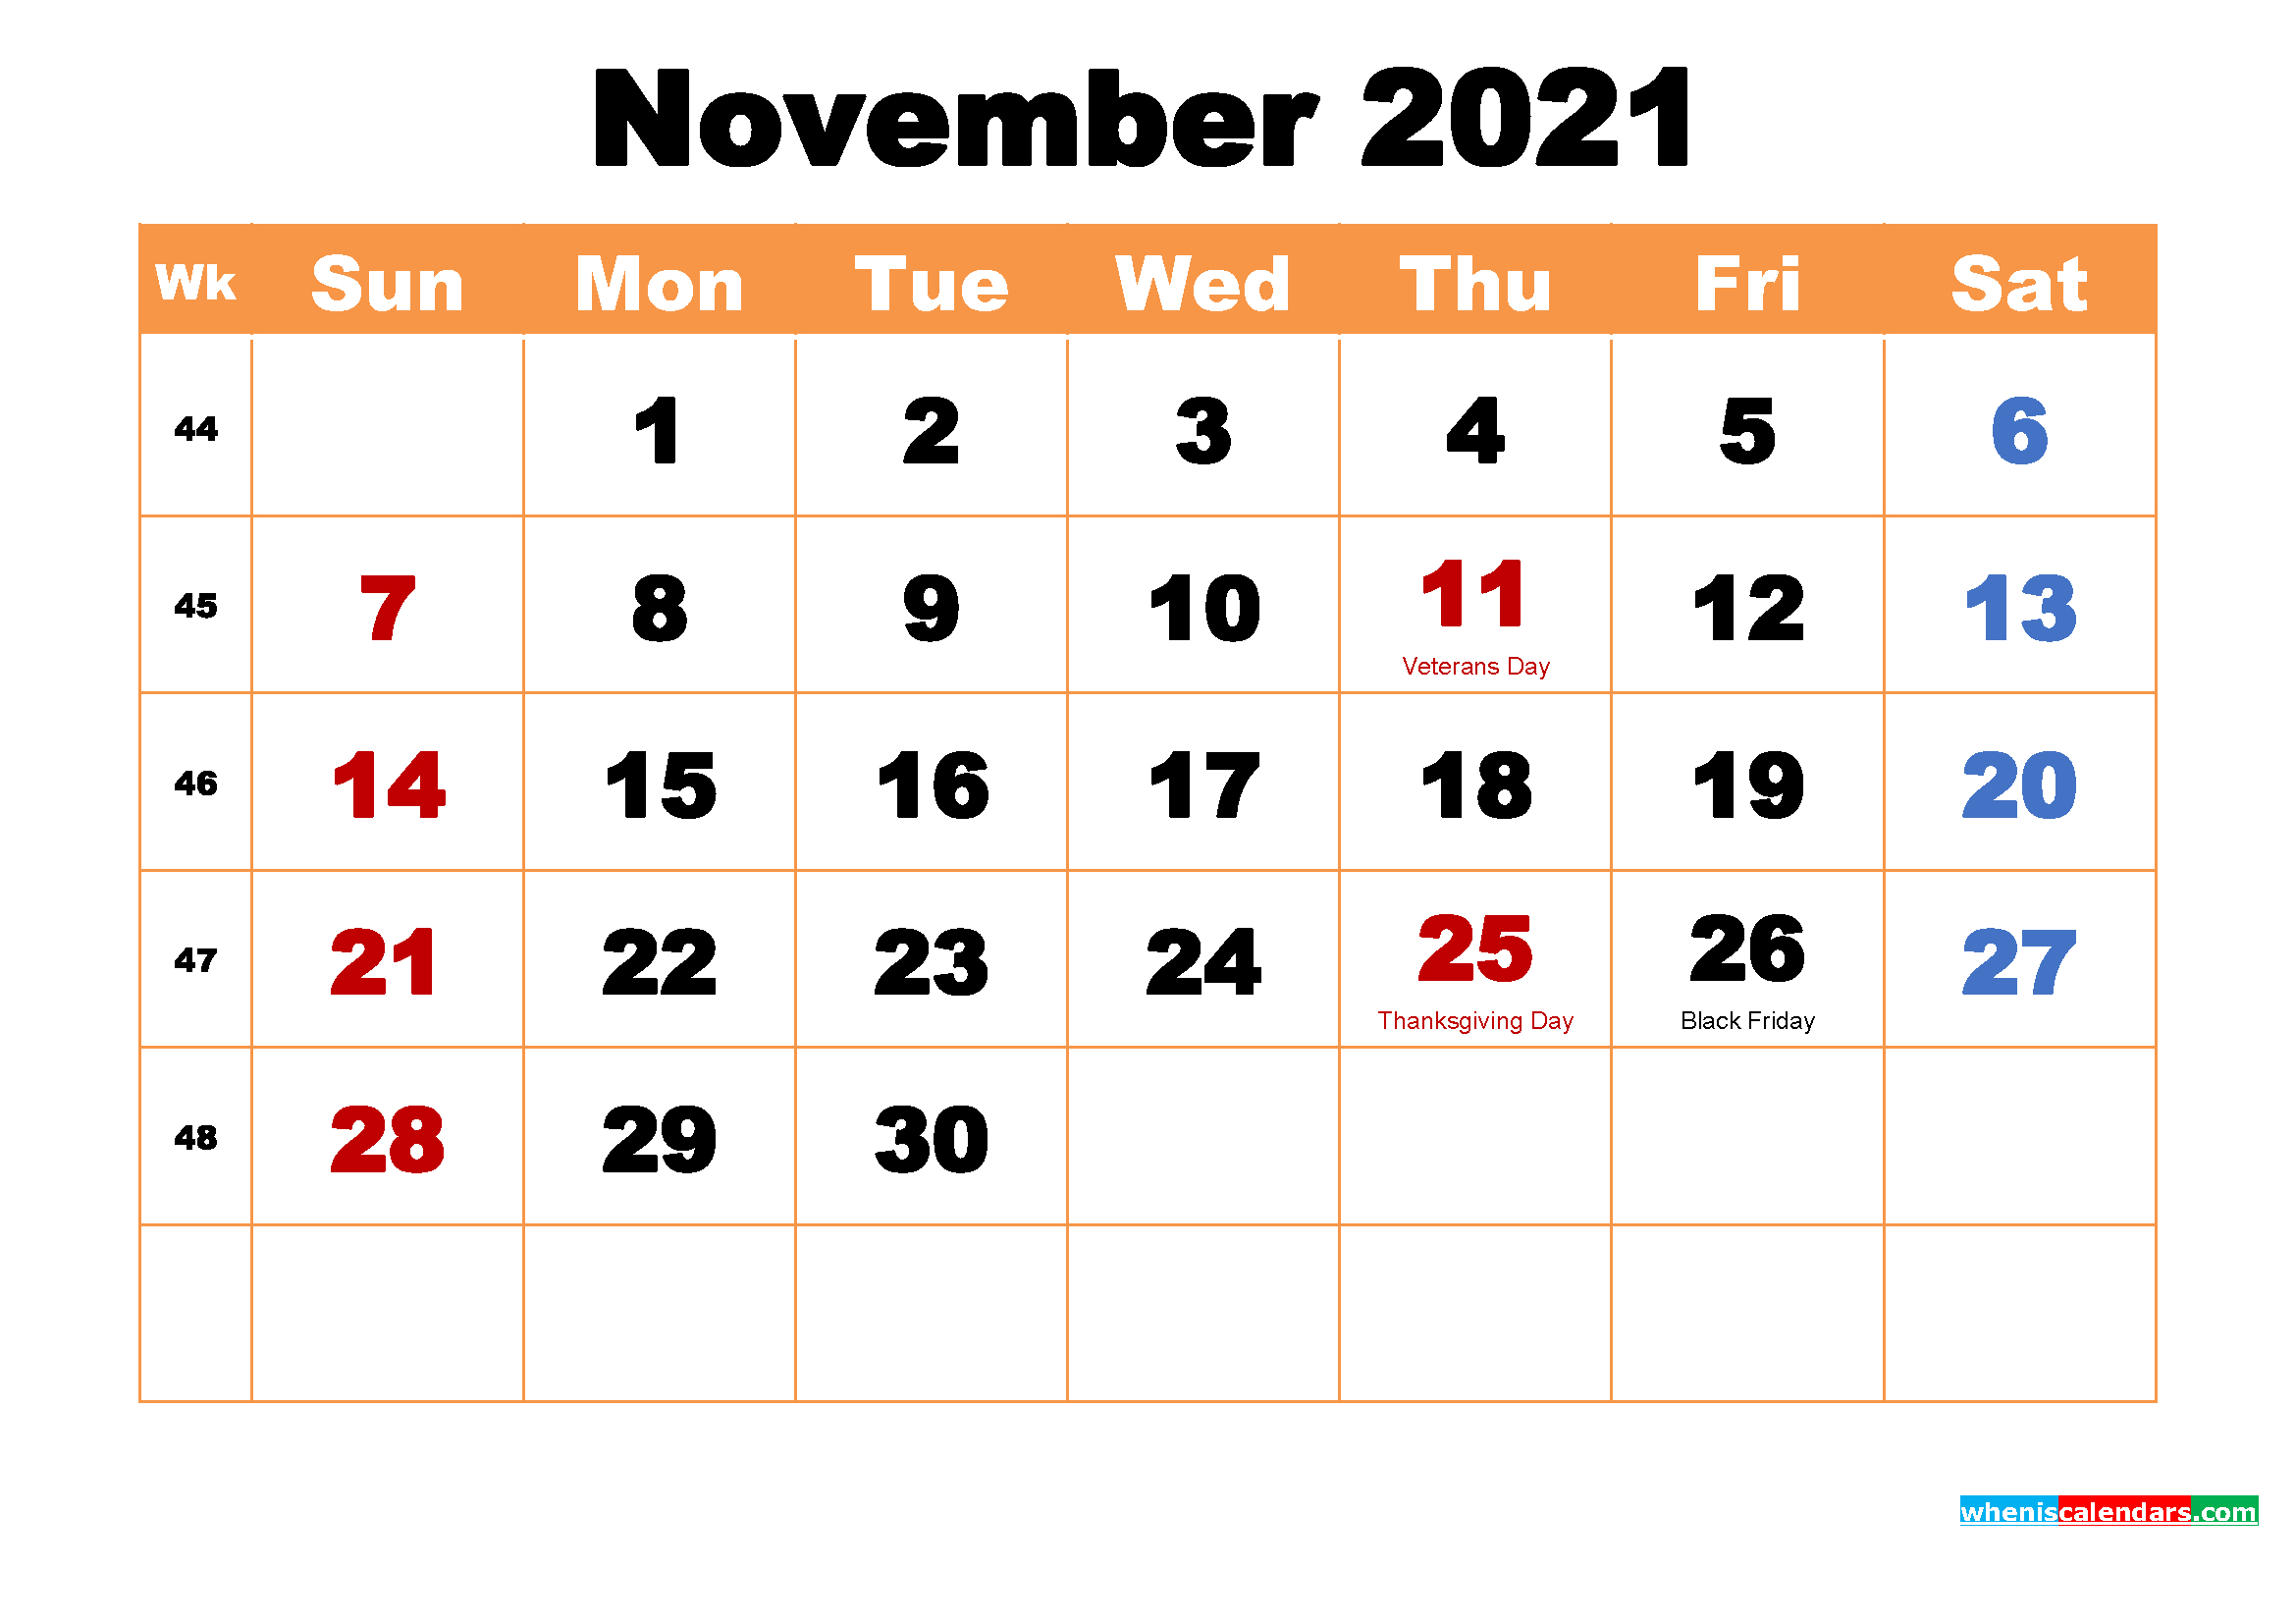 November 2021 Calendar Wallpaper | Lunar Calendar Lunar Calendar November 2021